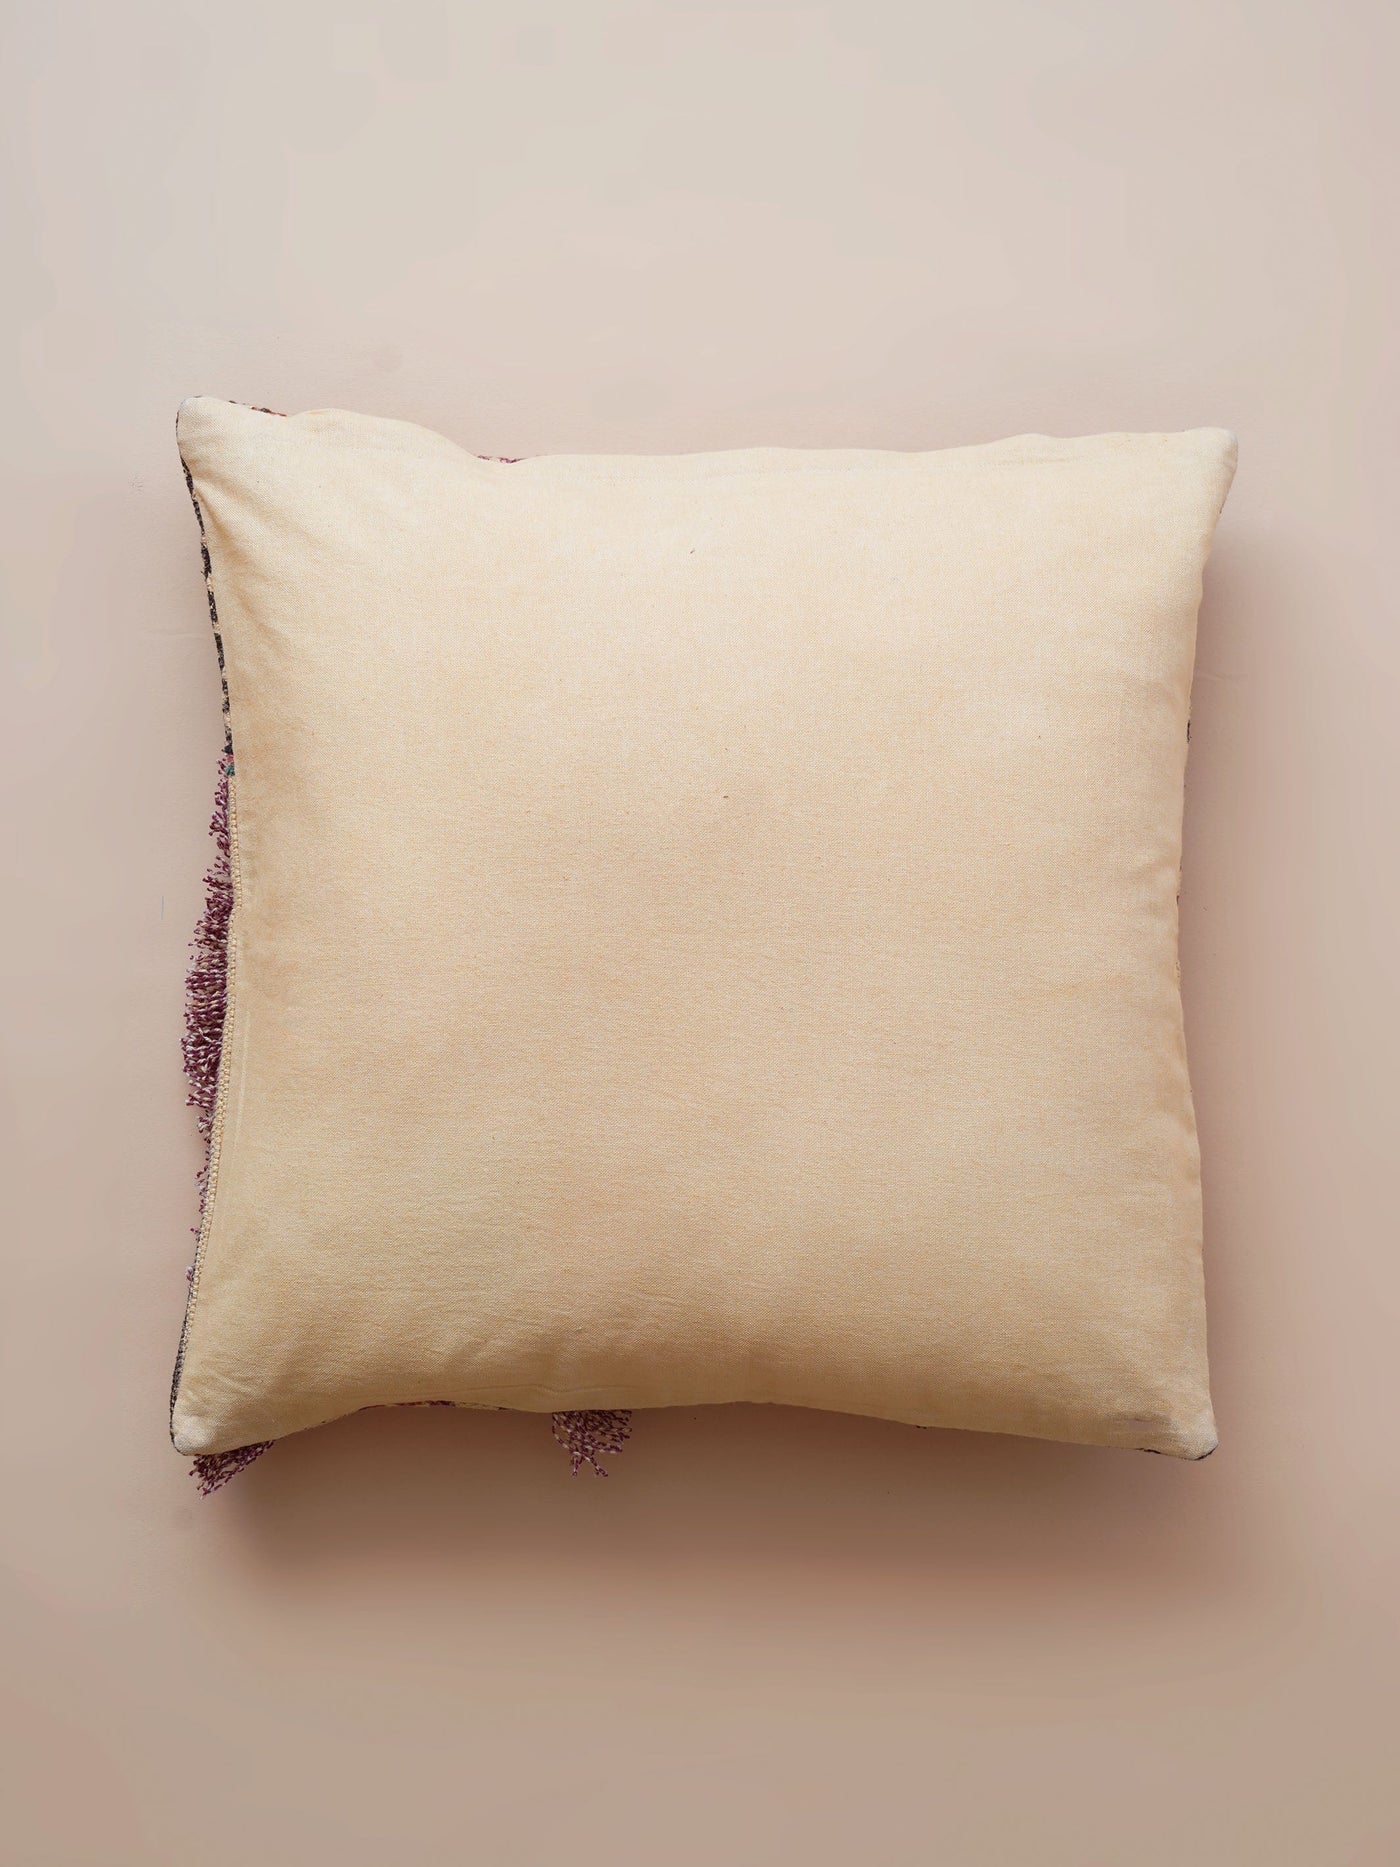 Moroccan Geometric Cushion Cover